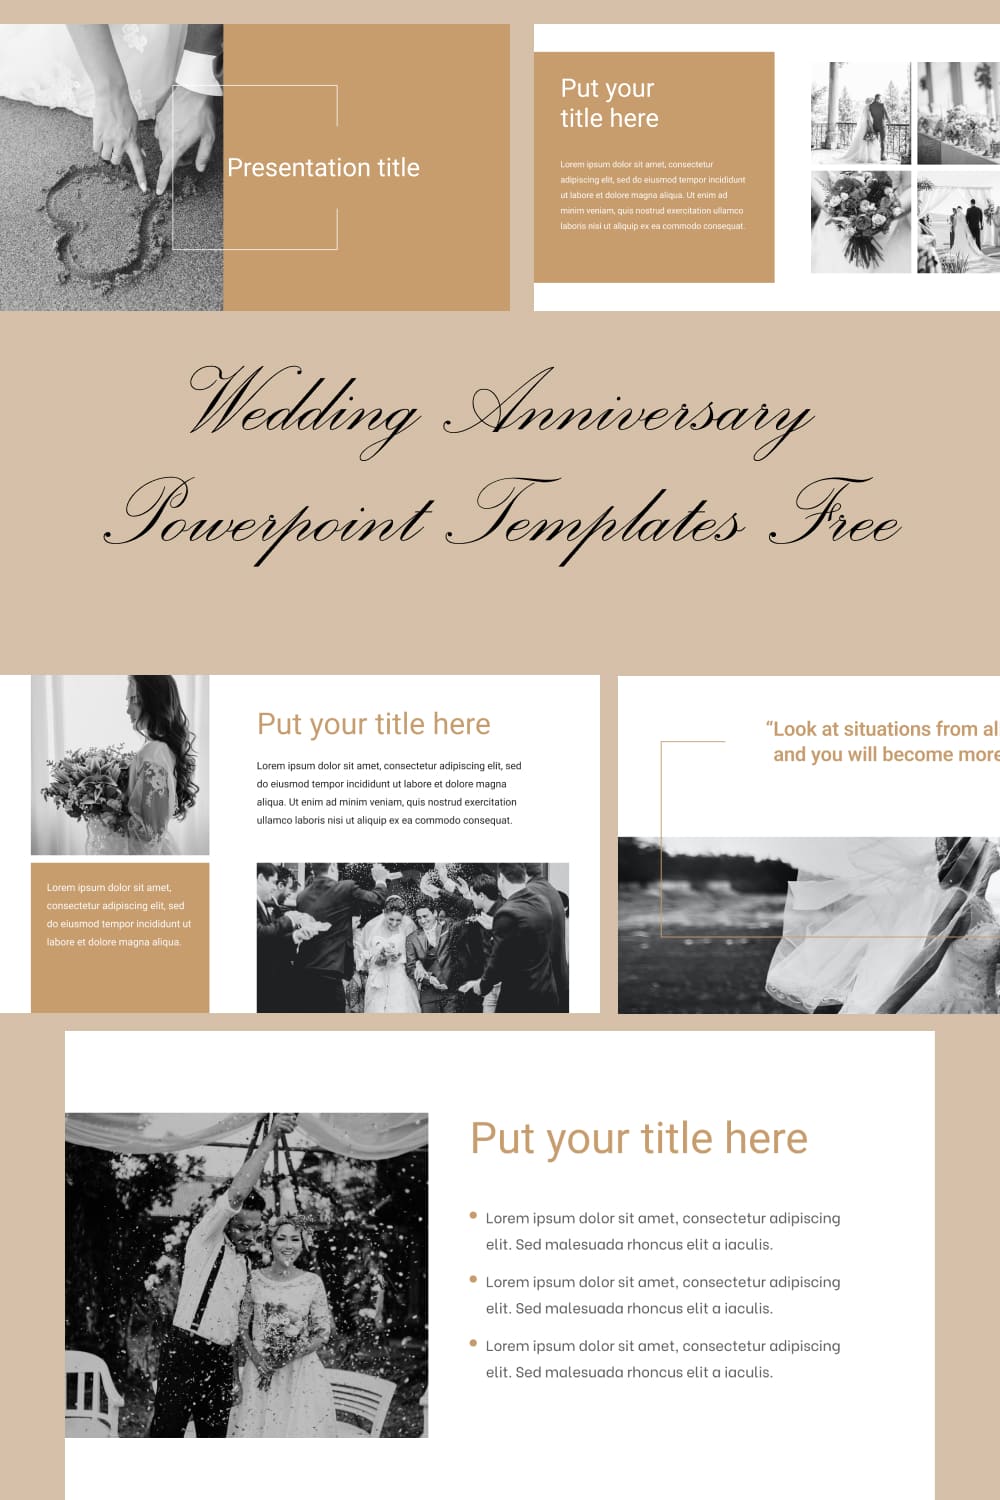 Pinterest Wedding Anniversary Powerpoint Templates Free.